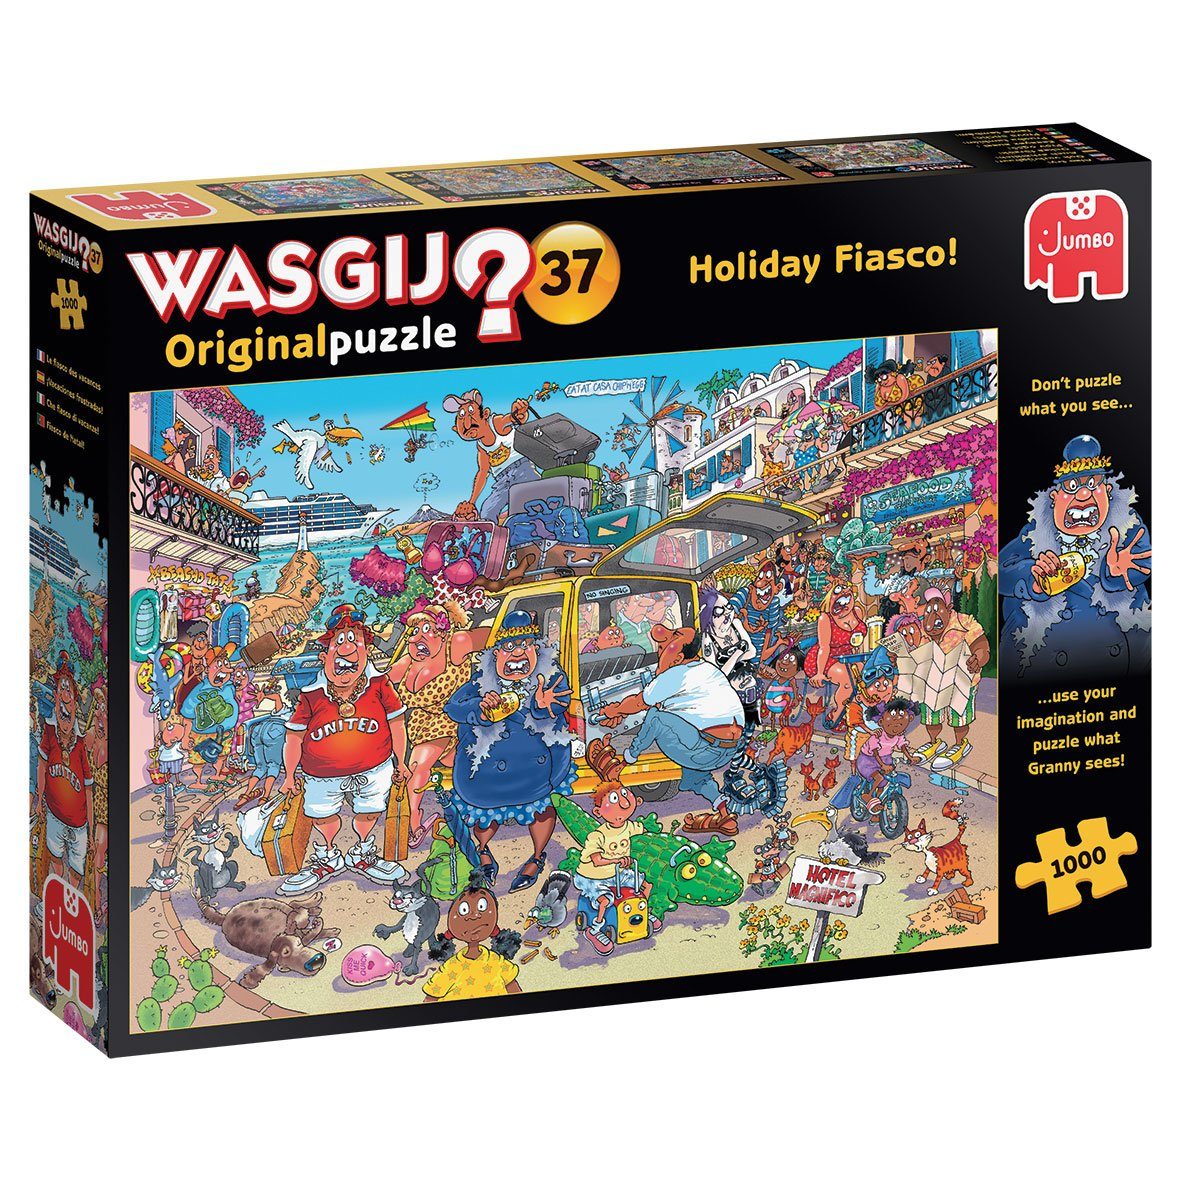 was Oma Holiday Wasgij sieht. 37 25004 1000 Puzzeln Sie Original Spiele die Jumbo Puzzle Puzzleteile, Fiasco!,